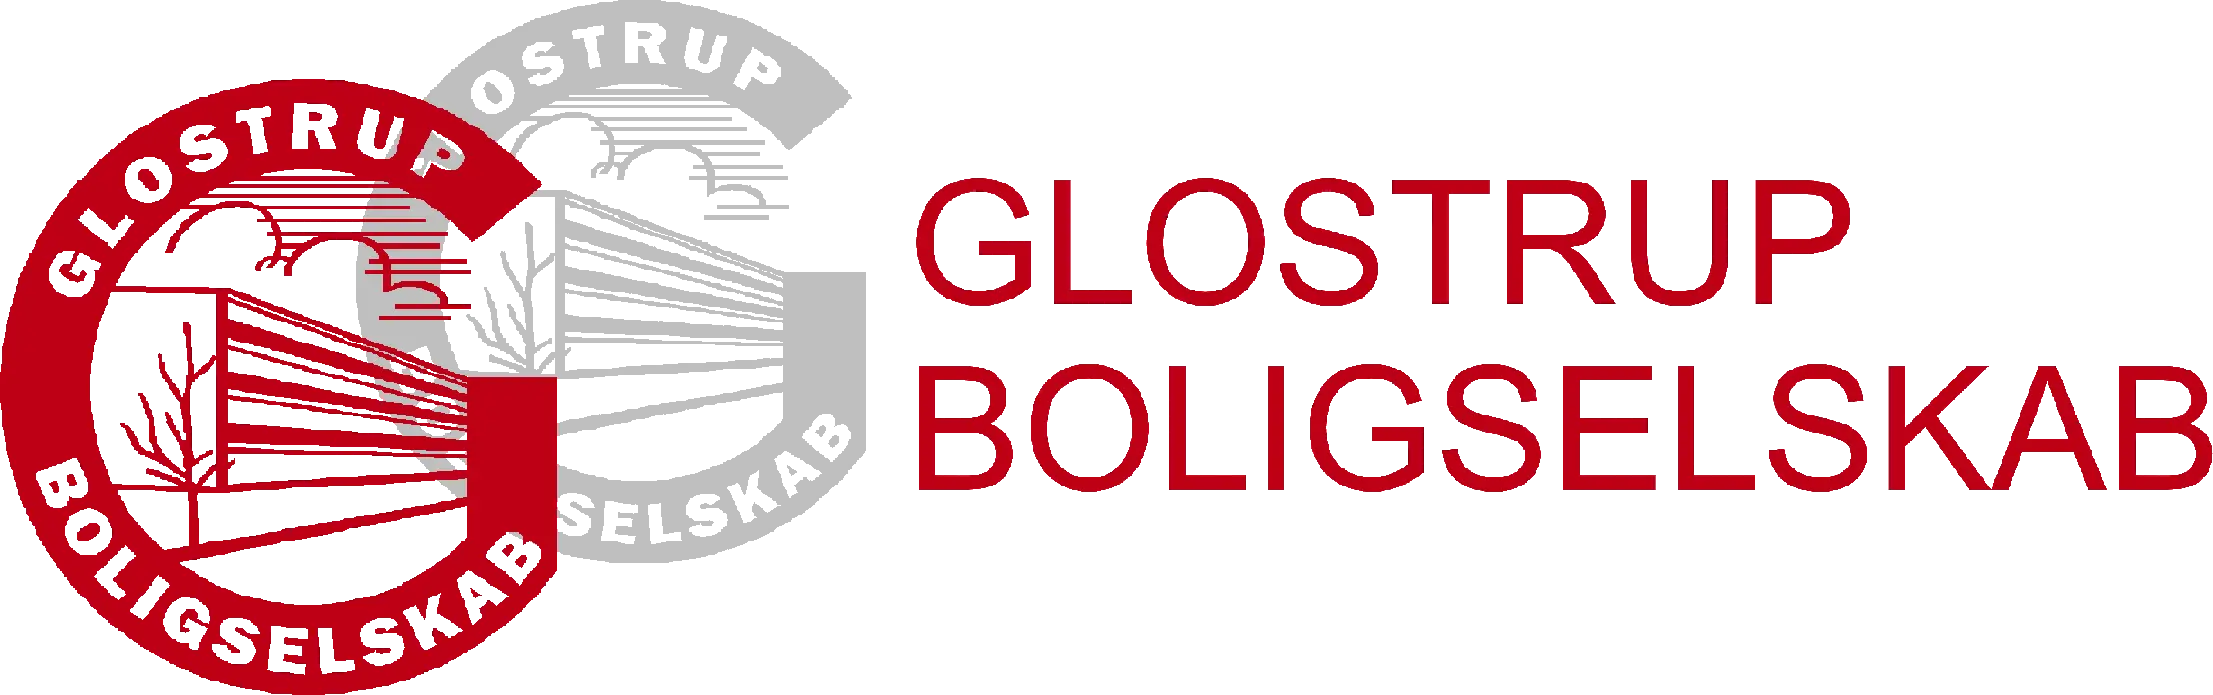 Glostrup boligselskab logo